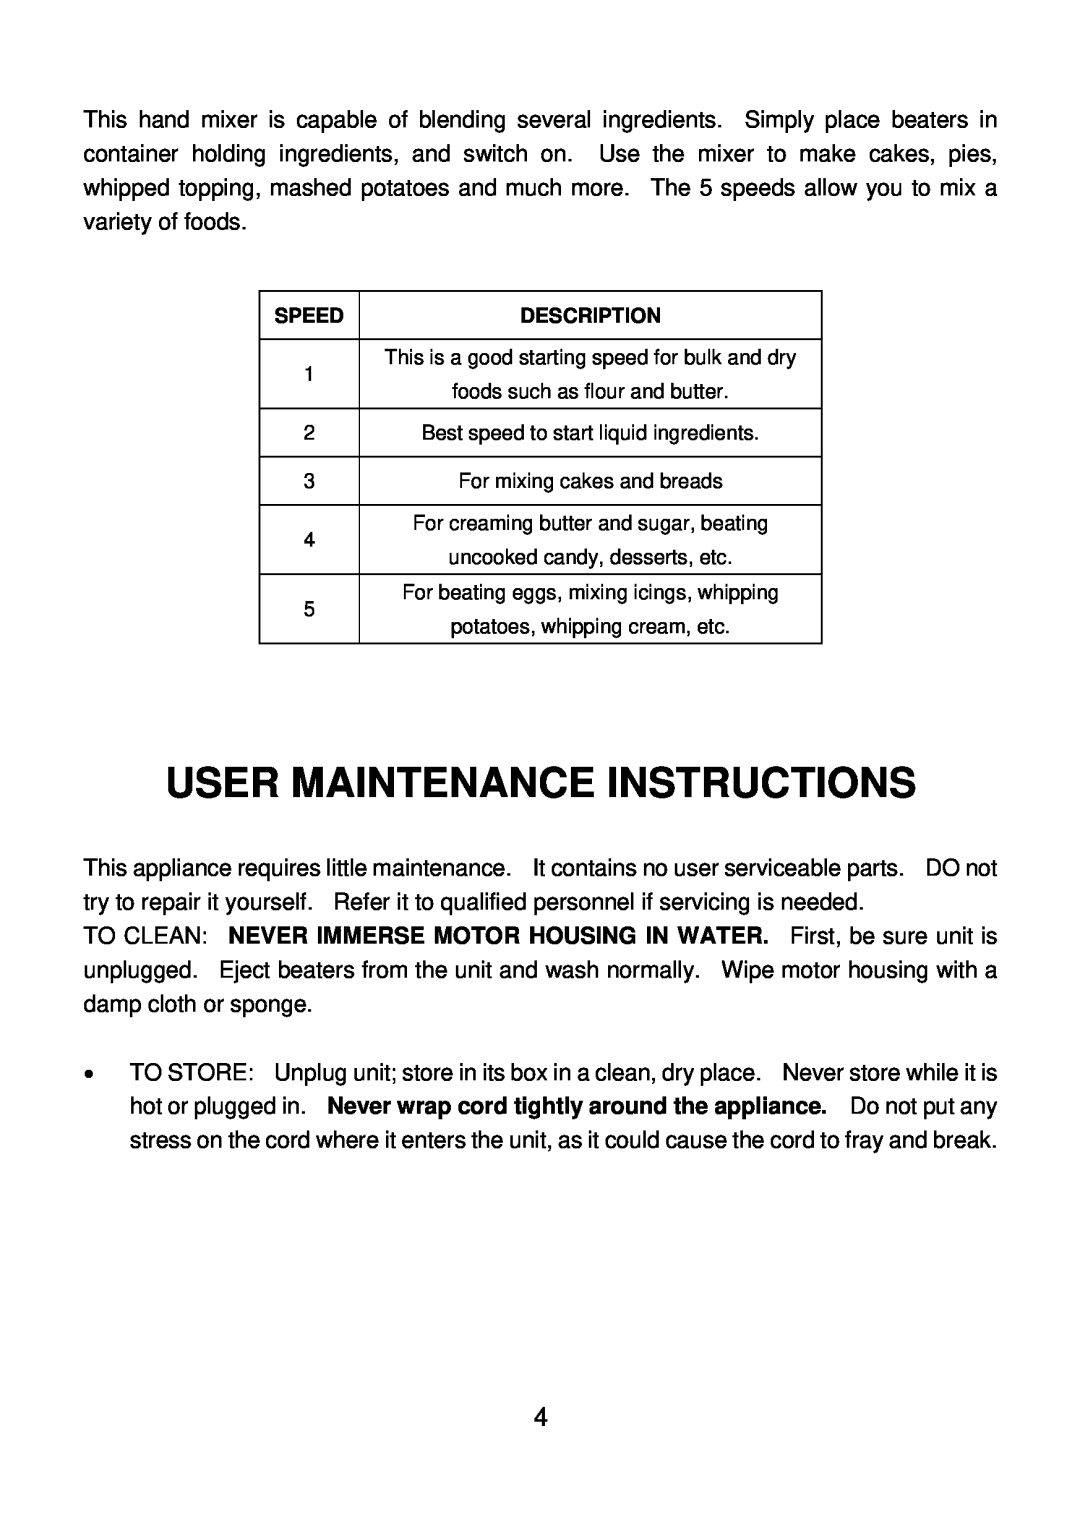 Rival HM-708 manual User Maintenance Instructions, Speed, Description 